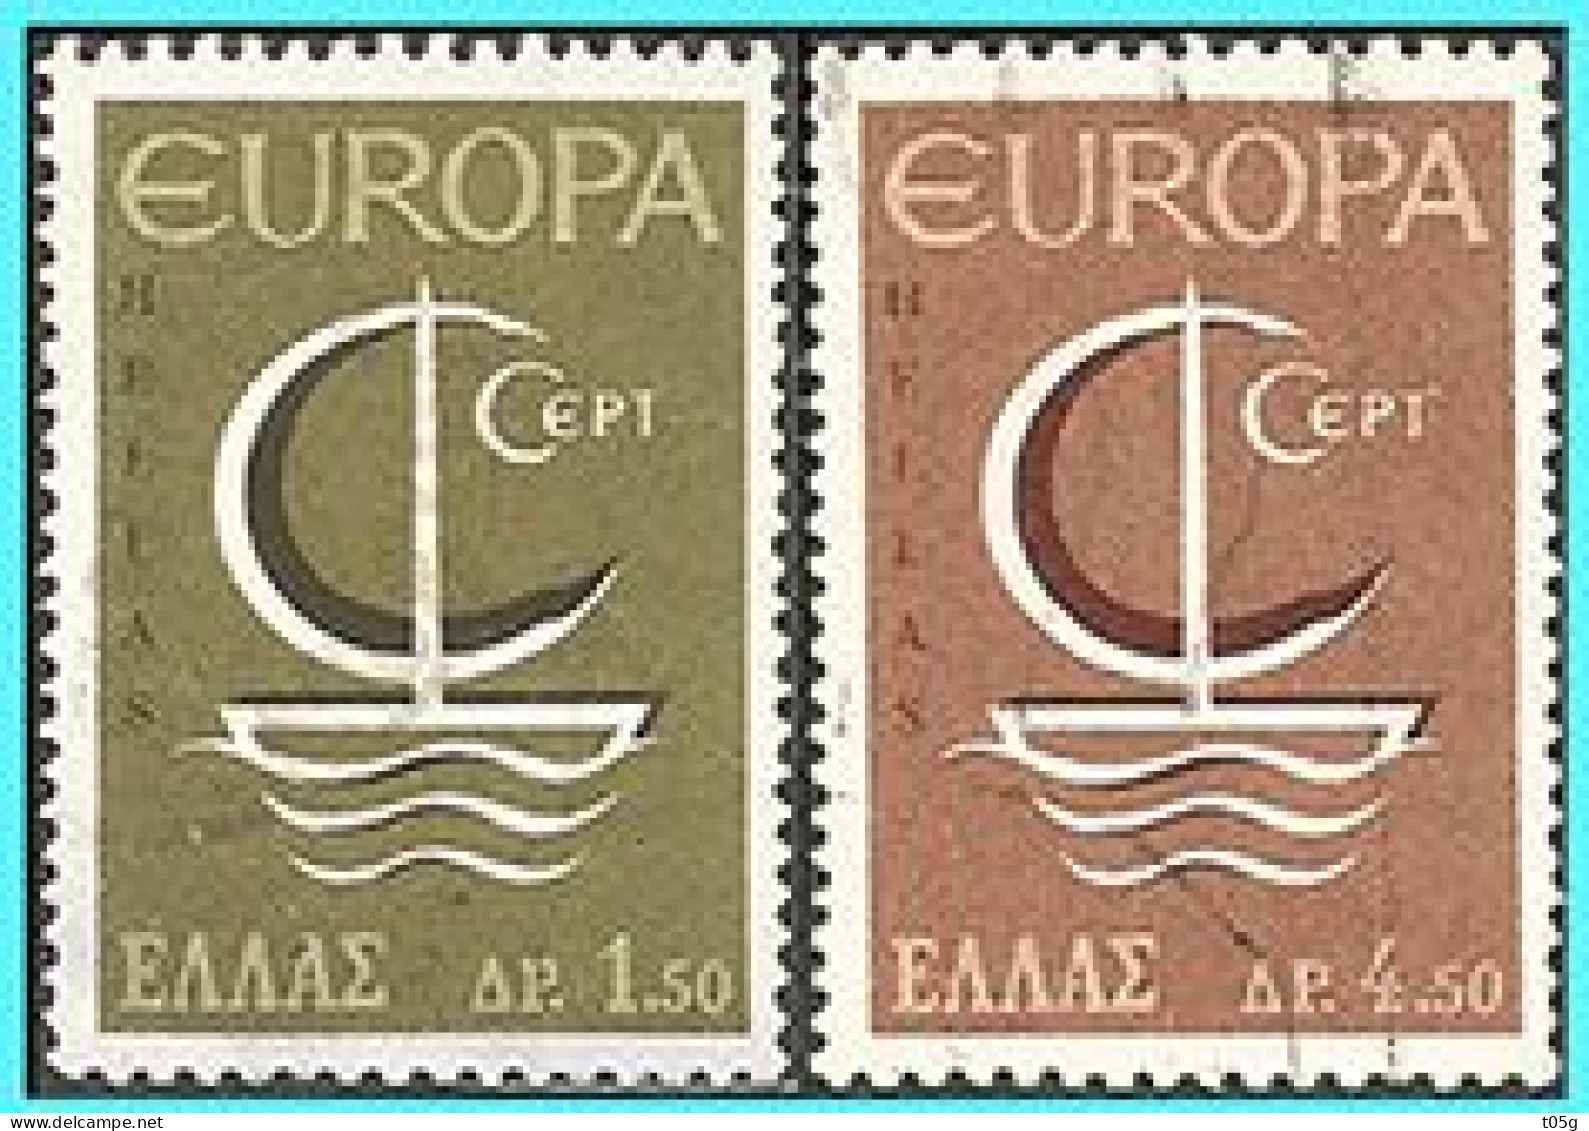 GREECE-GRECE - HELLAS 1966: Europa Compl Set Used - Gebruikt